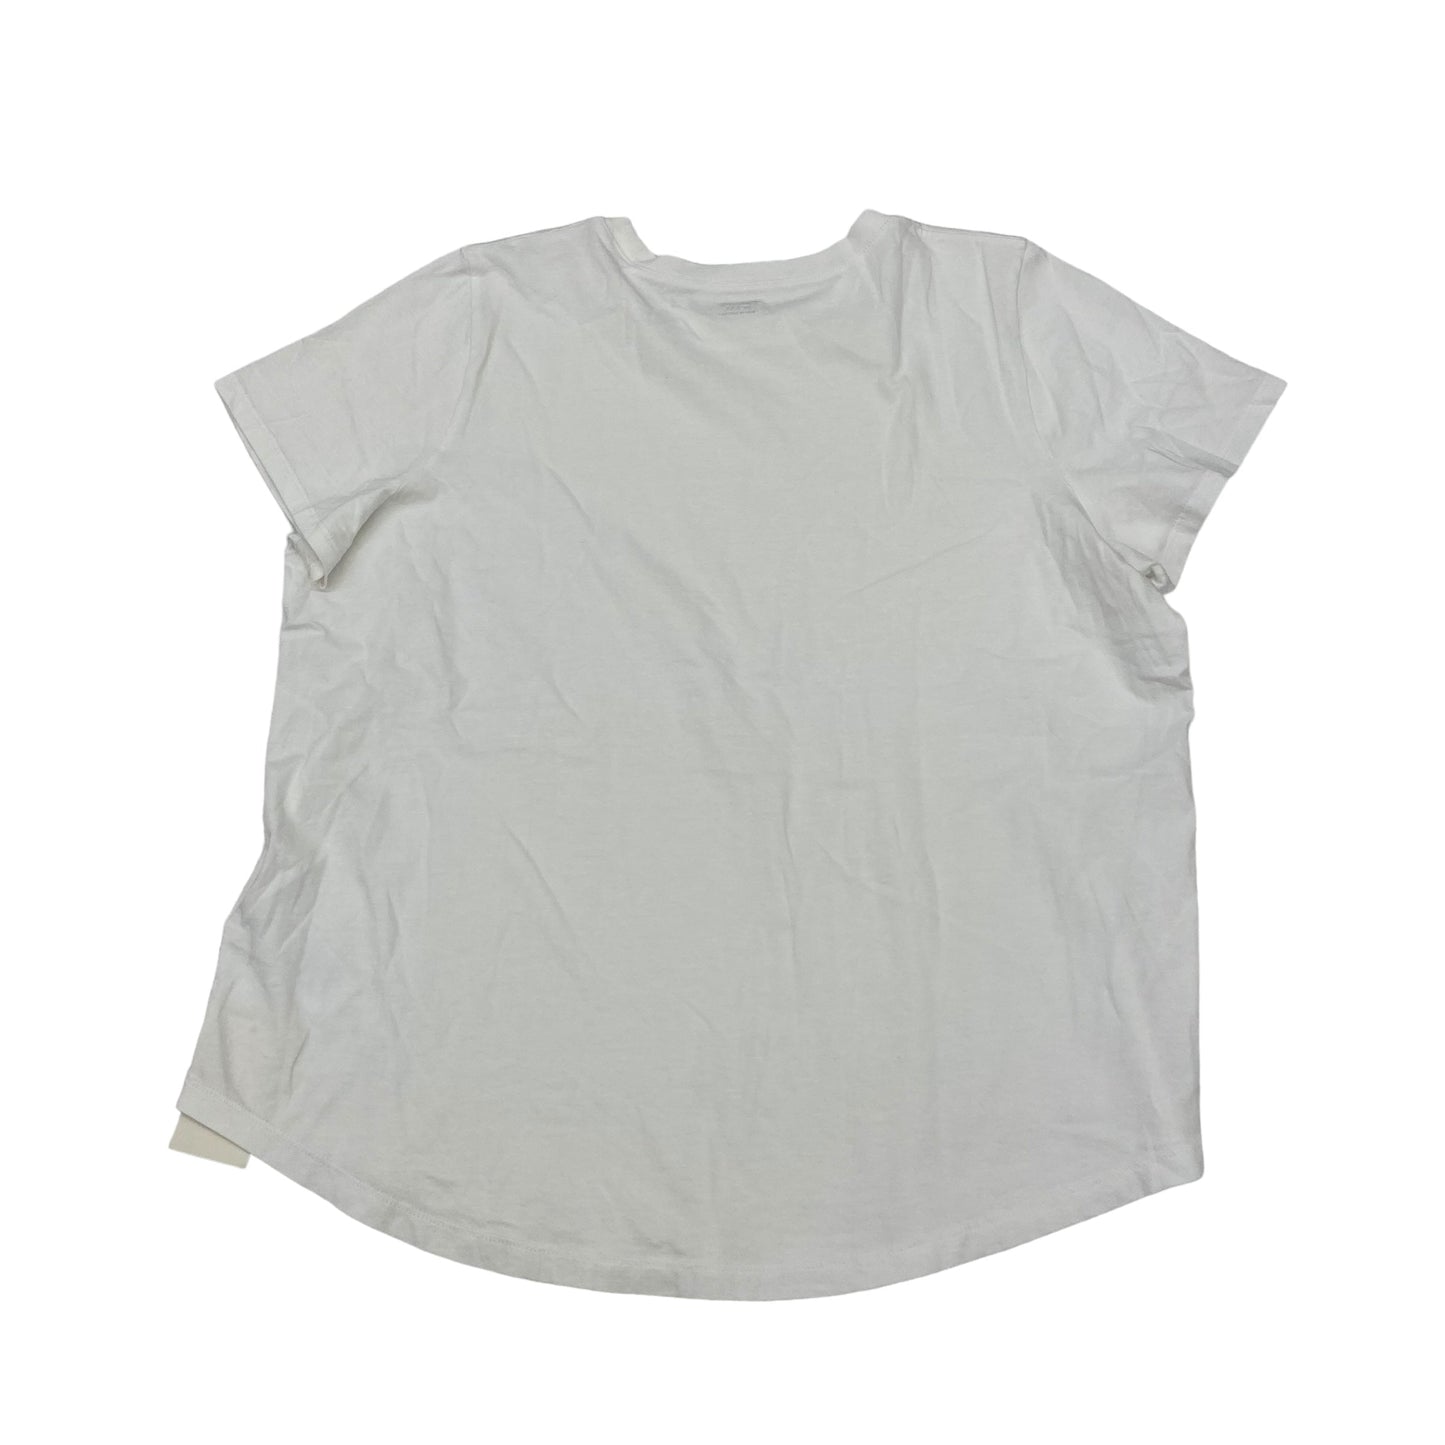 White Top Short Sleeve Basic Madewell, Size 2x